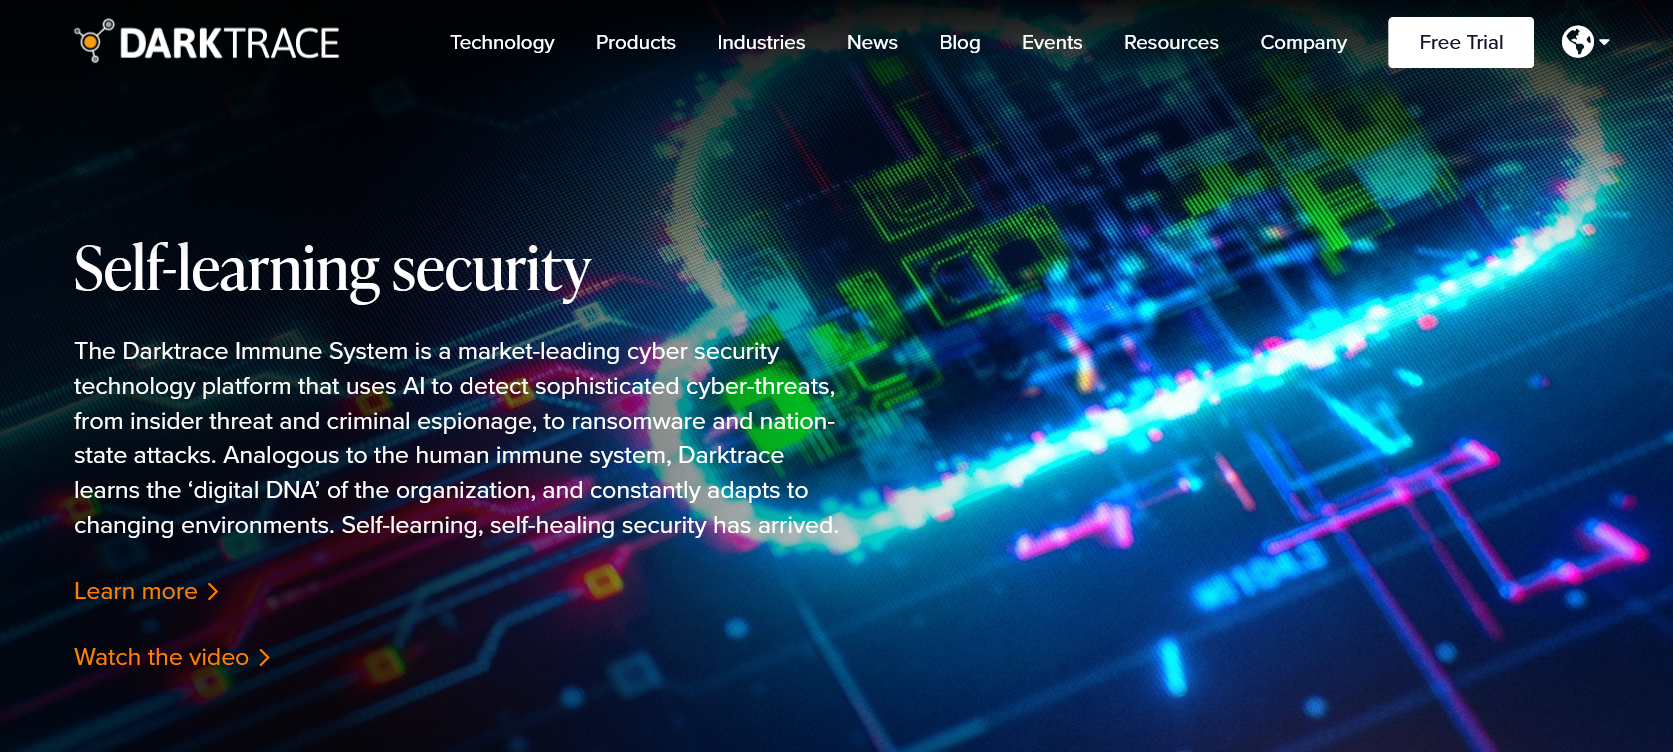 Darktrace Cybersecurity Software